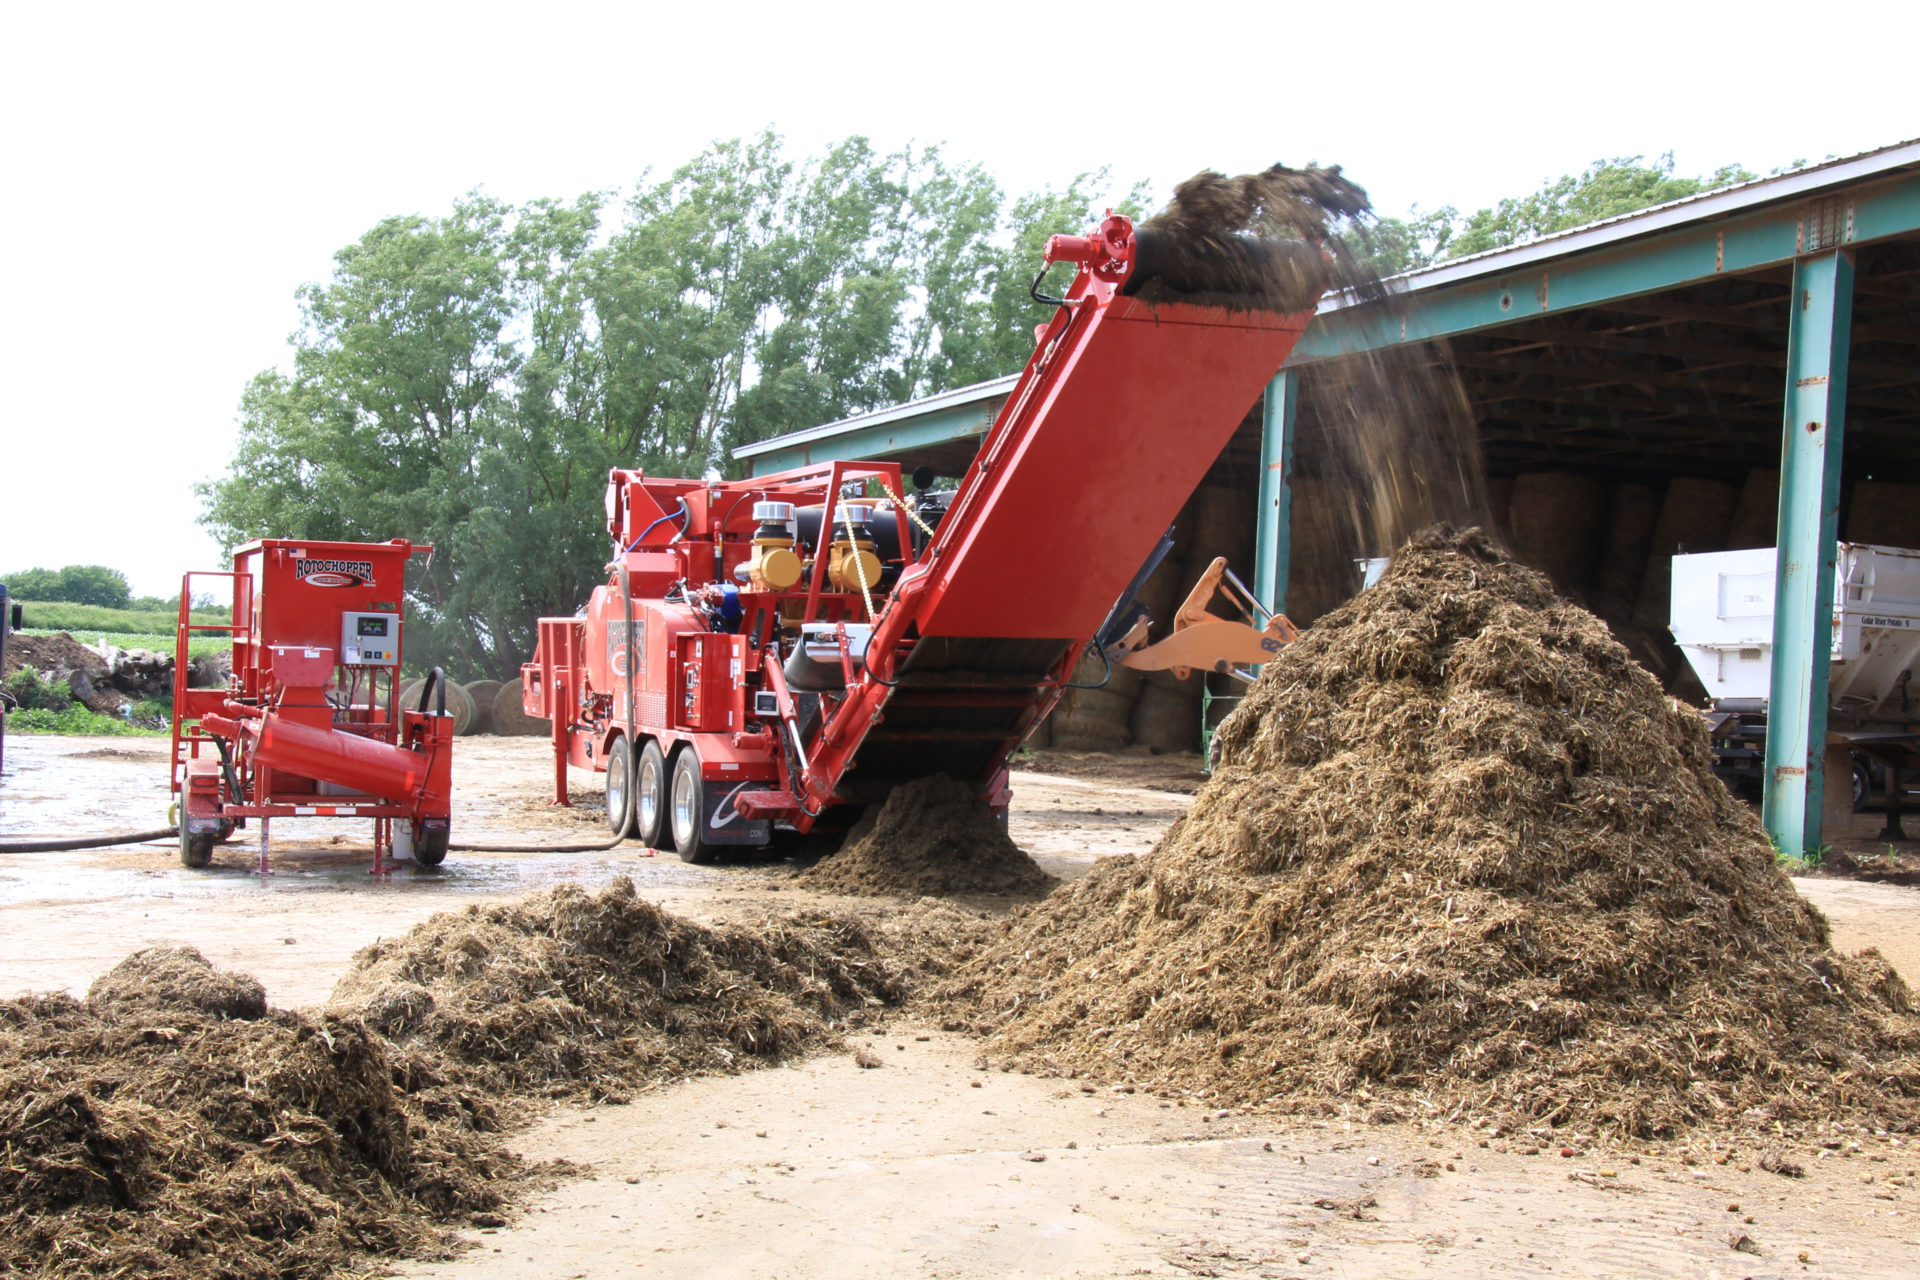 ruminator b66 grinding hay